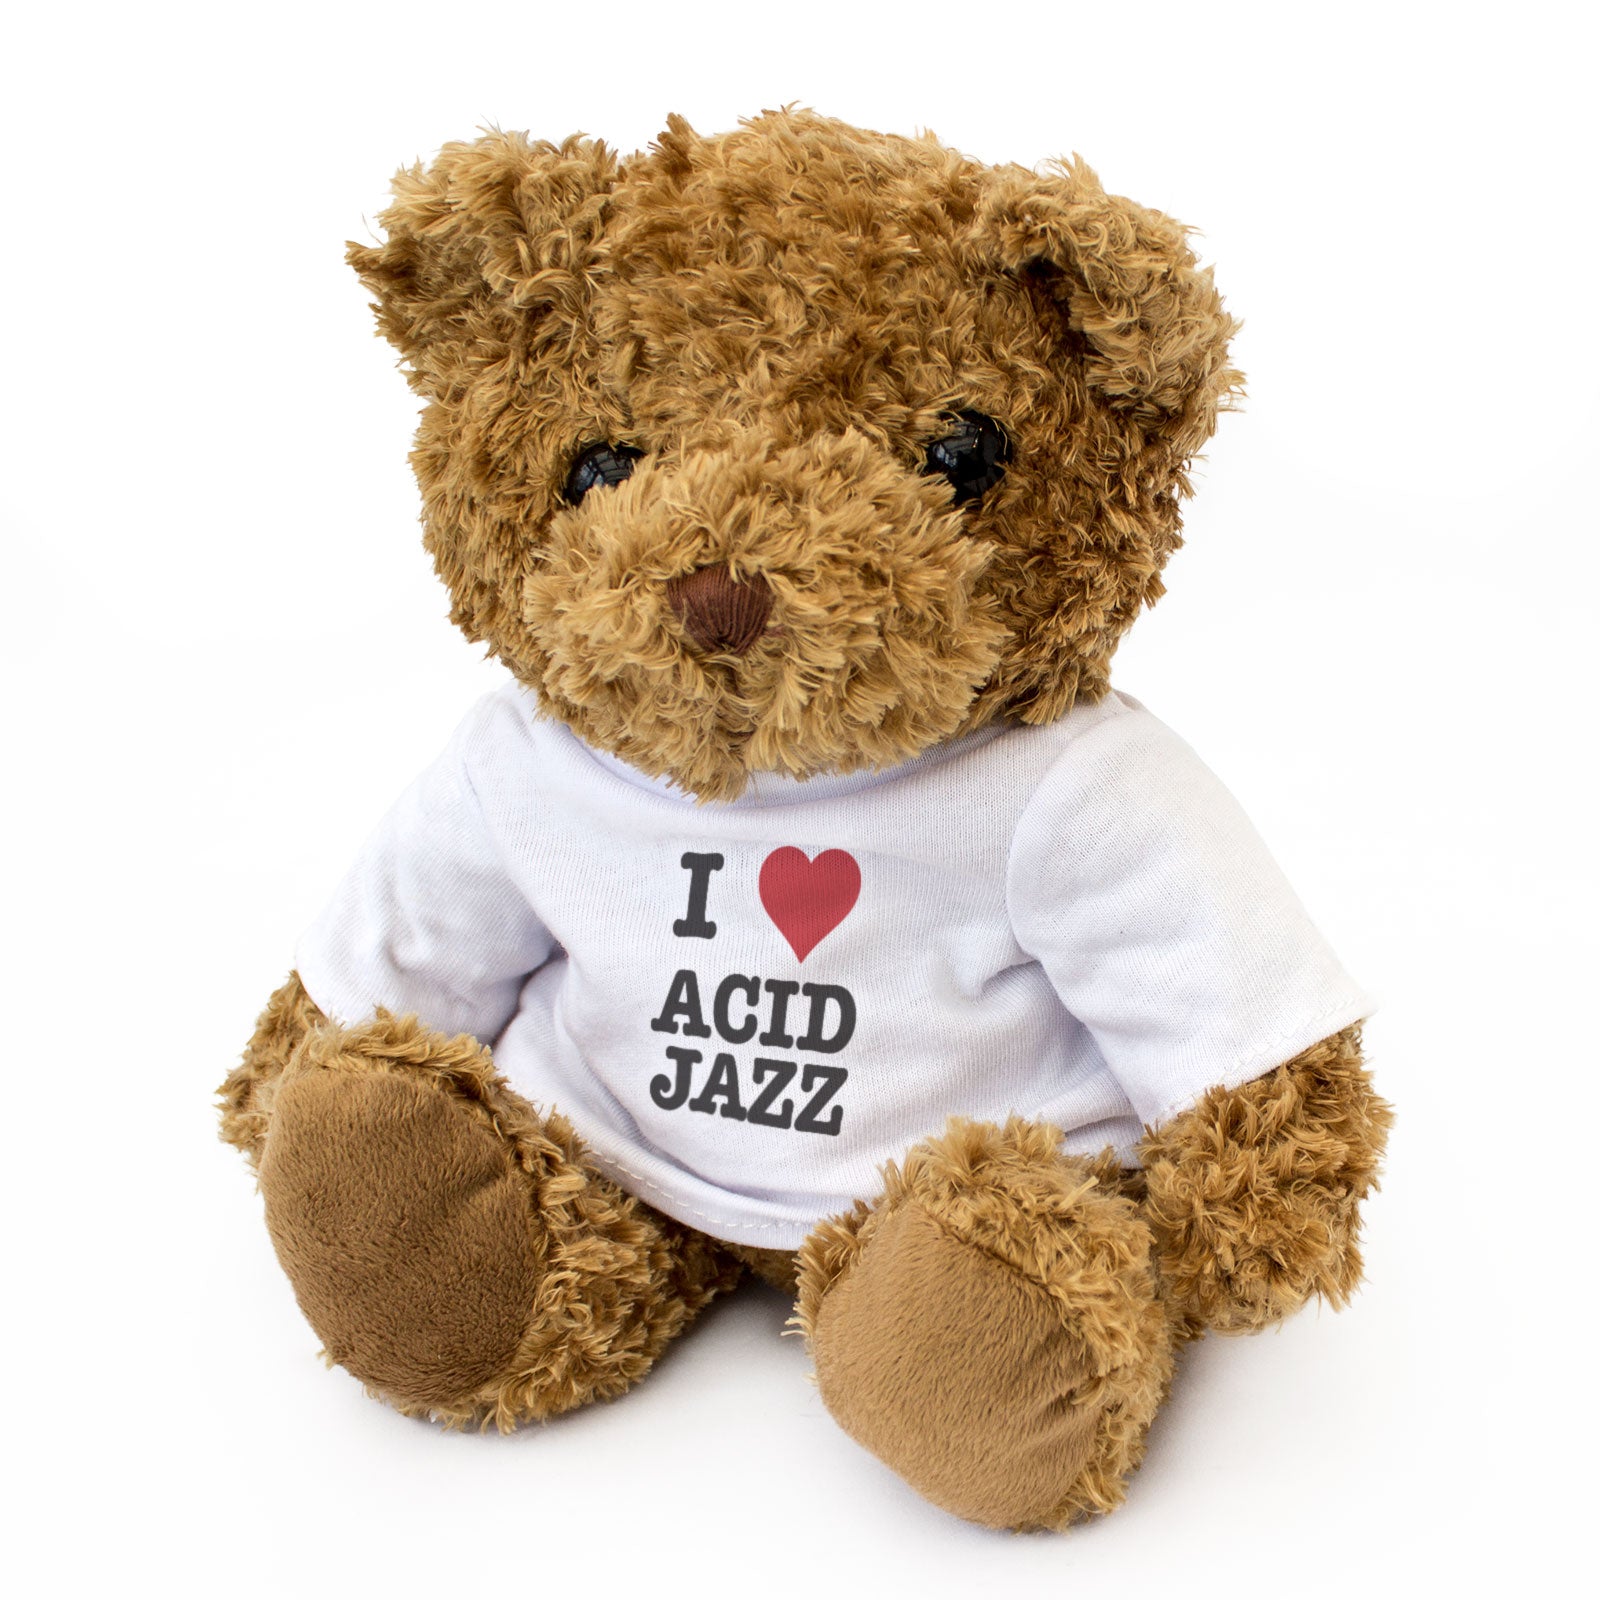 I Love Acid Jazz - Teddy Bear